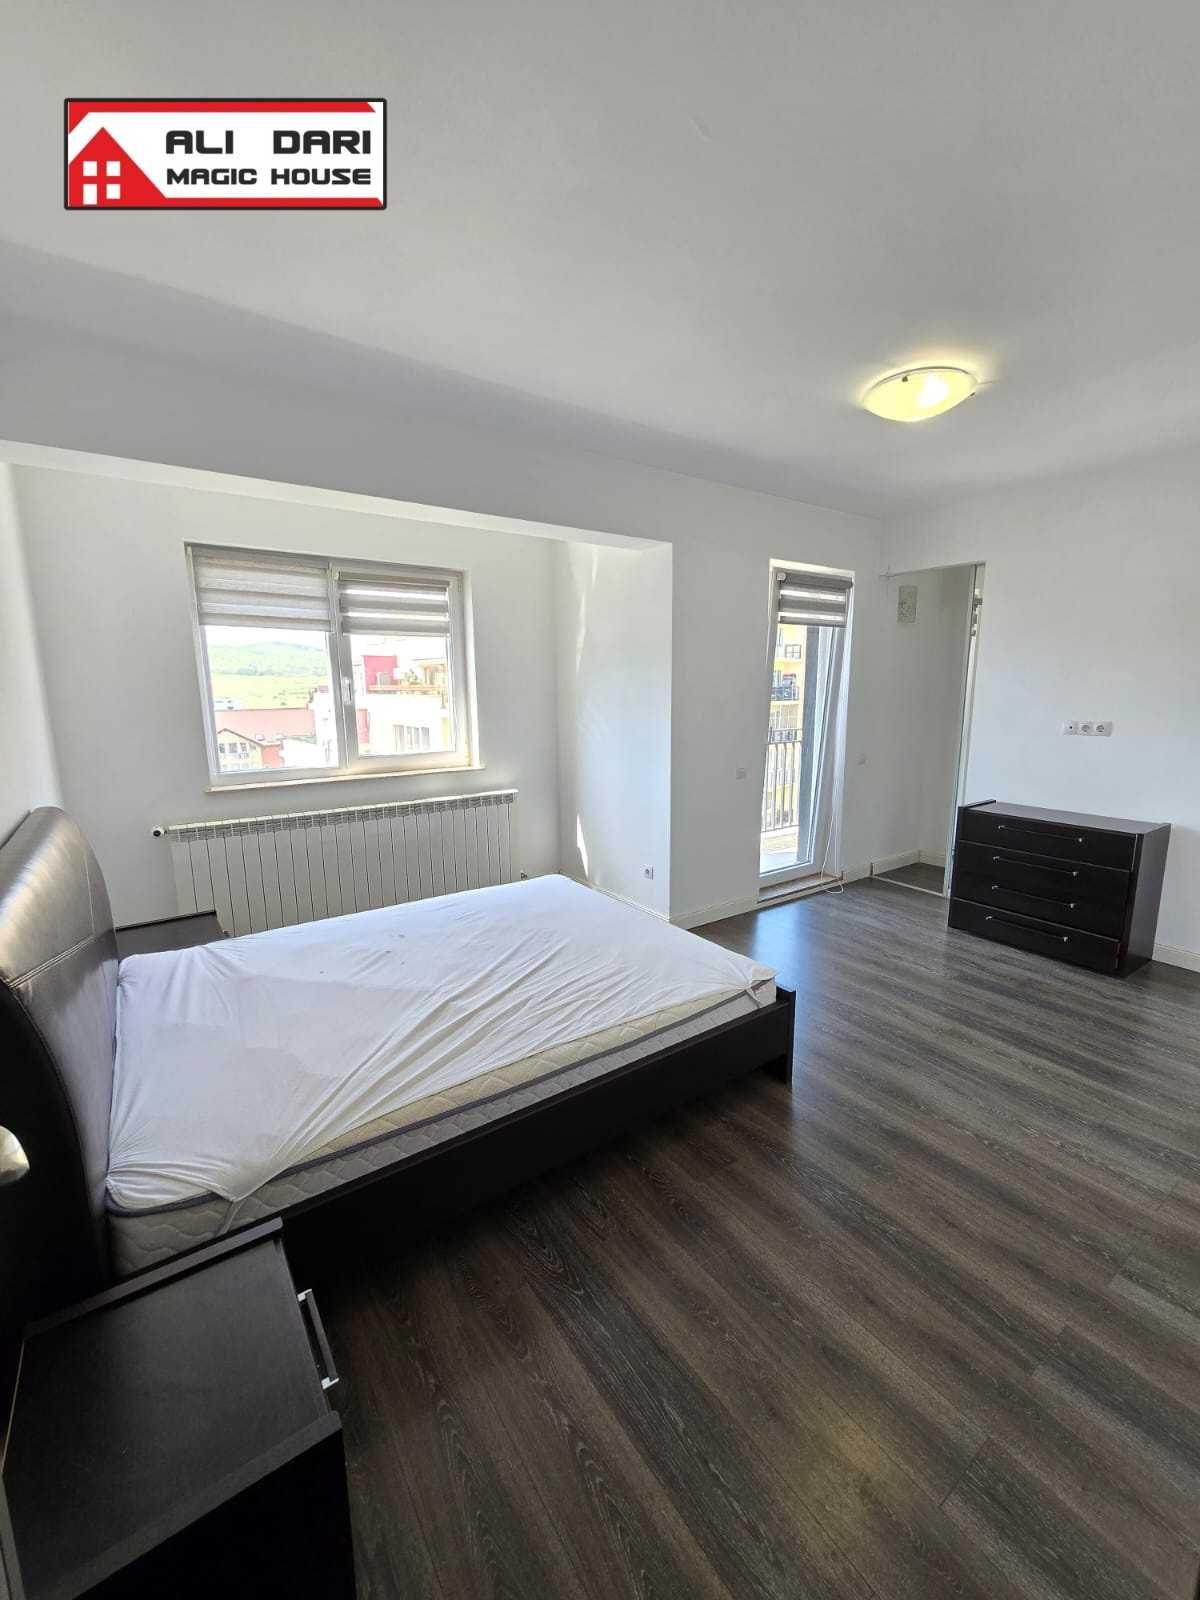 NOU !  De Vanzare apartament 3 camere 66 m² + 2 balcoane!